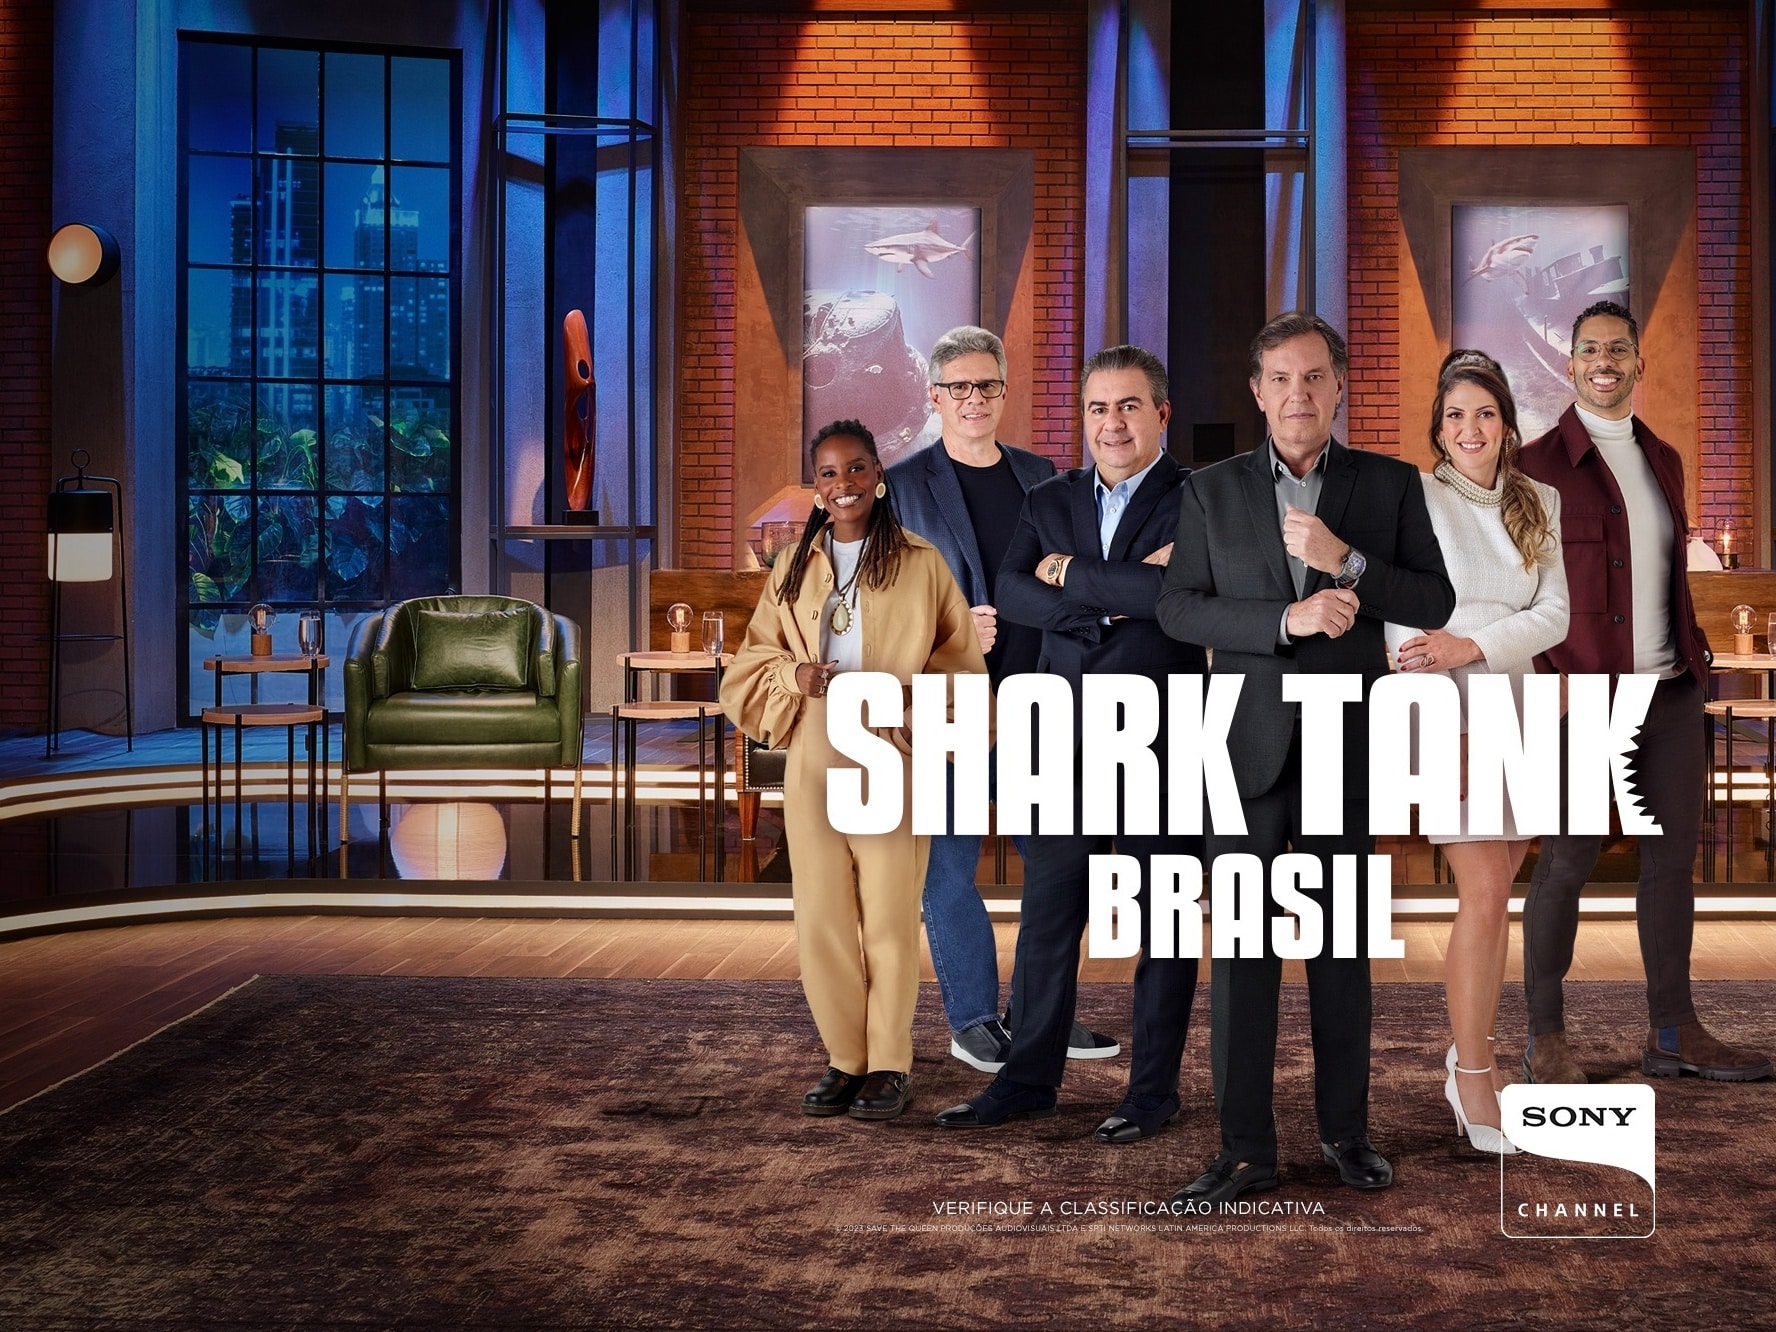 Shark Tank Brasil” e Amstel promovem episódio com empreendedores